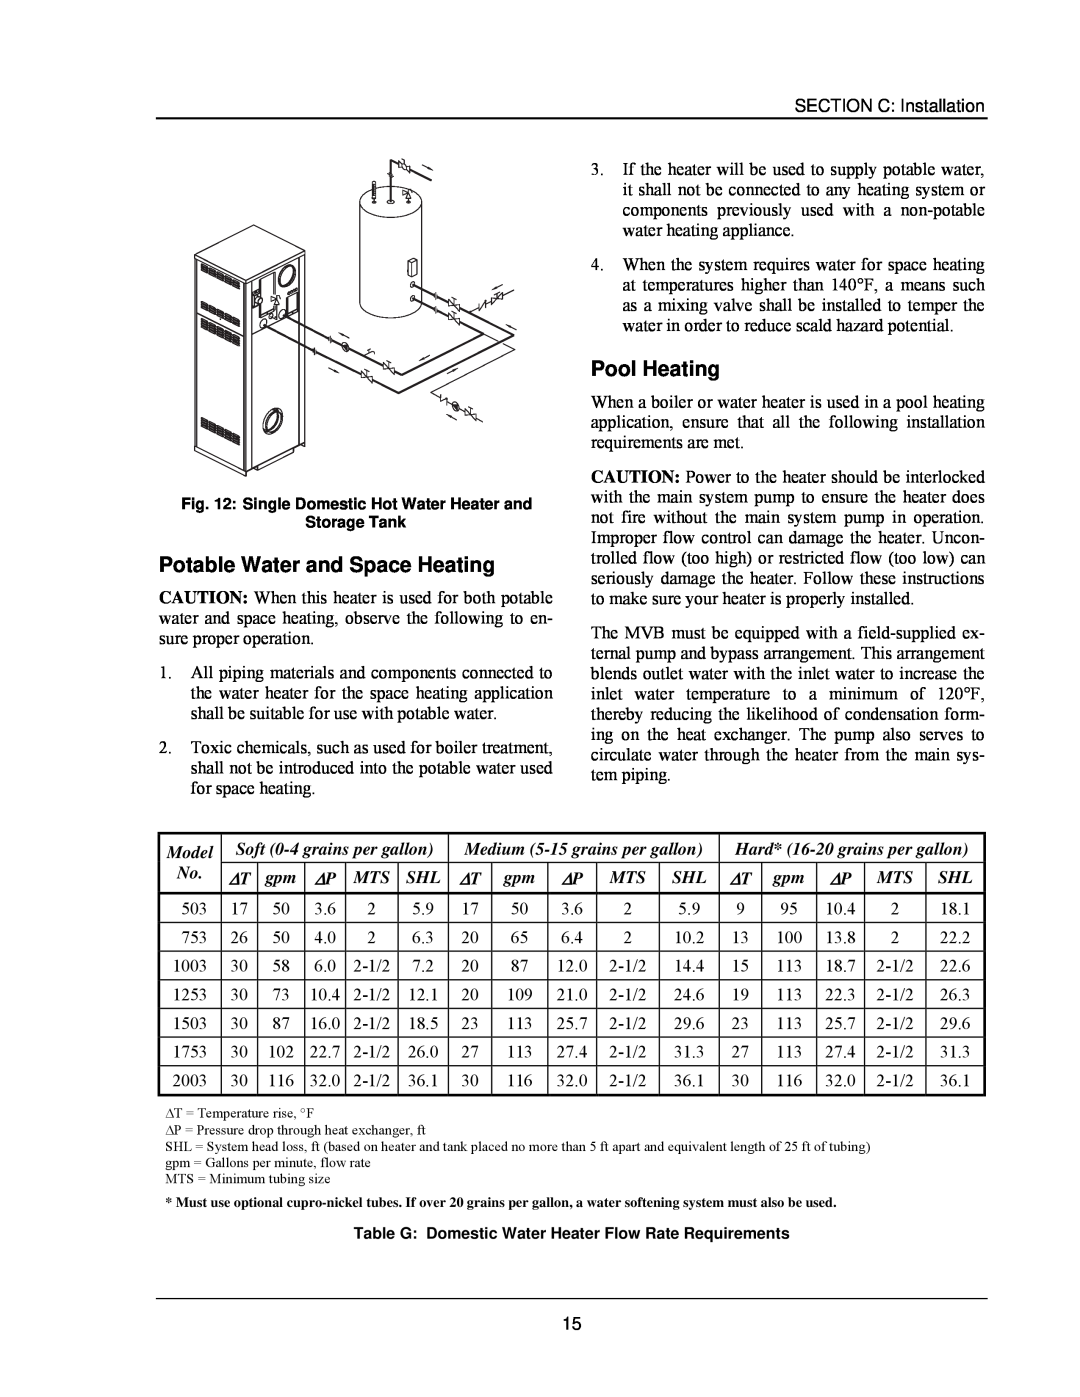 Raypak 503-2003 manual Potable Water and Space Heating, Pool Heating 